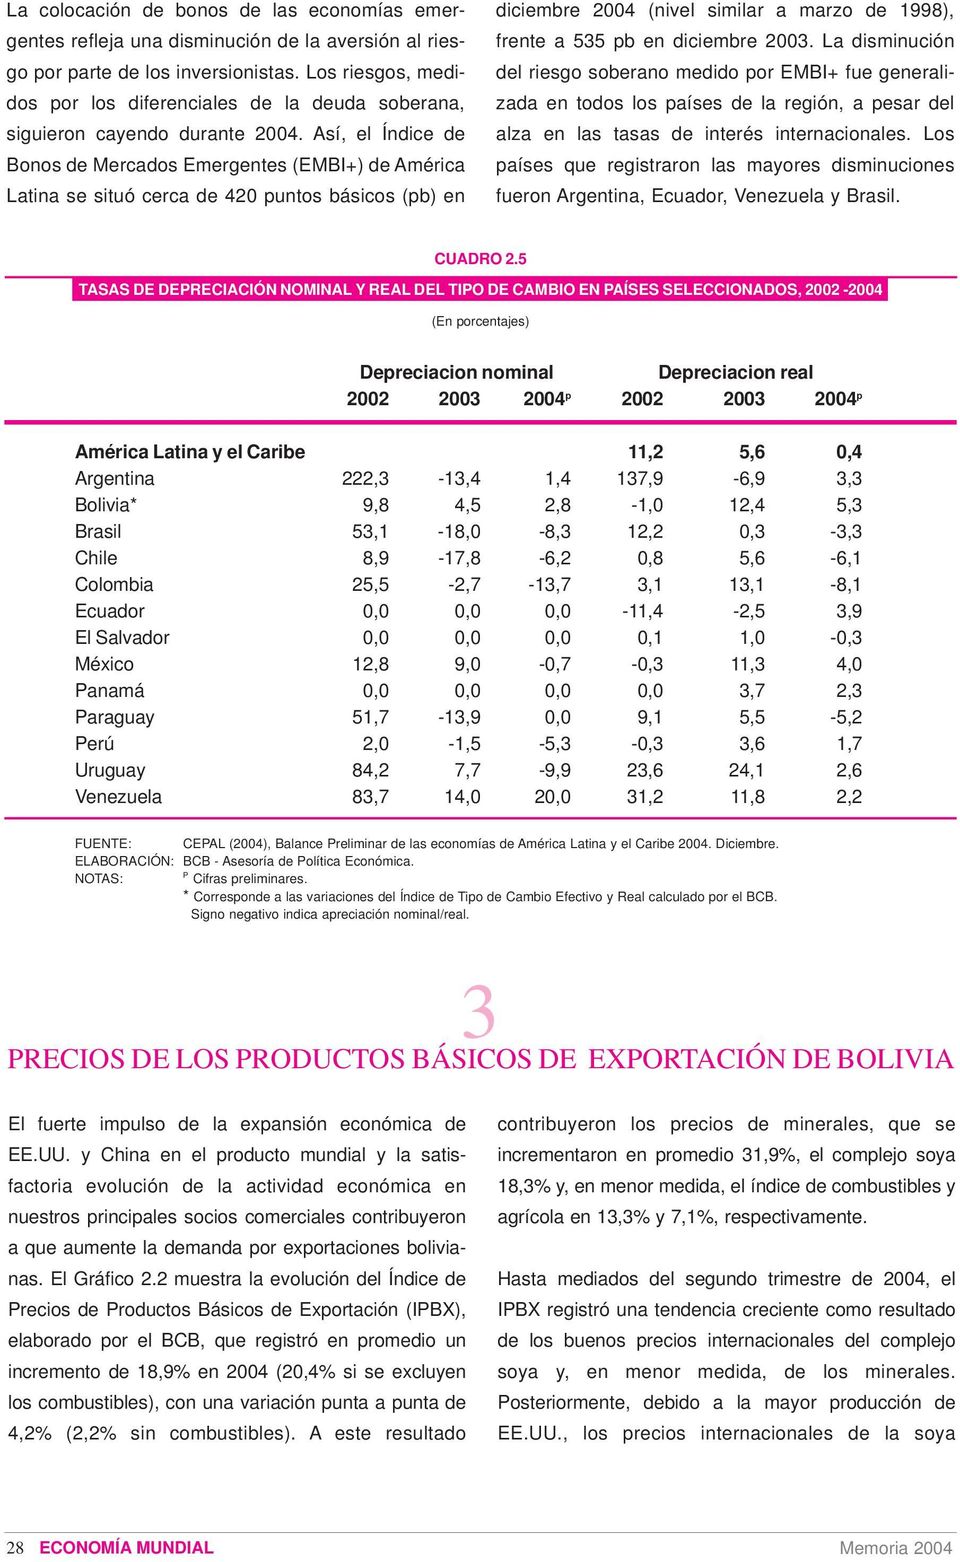 Así, el Índice de Bonos de Mercados Emergentes (EMBI+) de América Latina se situó cerca de 420 puntos básicos (pb) en diciembre 2004 (nivel similar a marzo de 1998), frente a 535 pb en diciembre 2003.